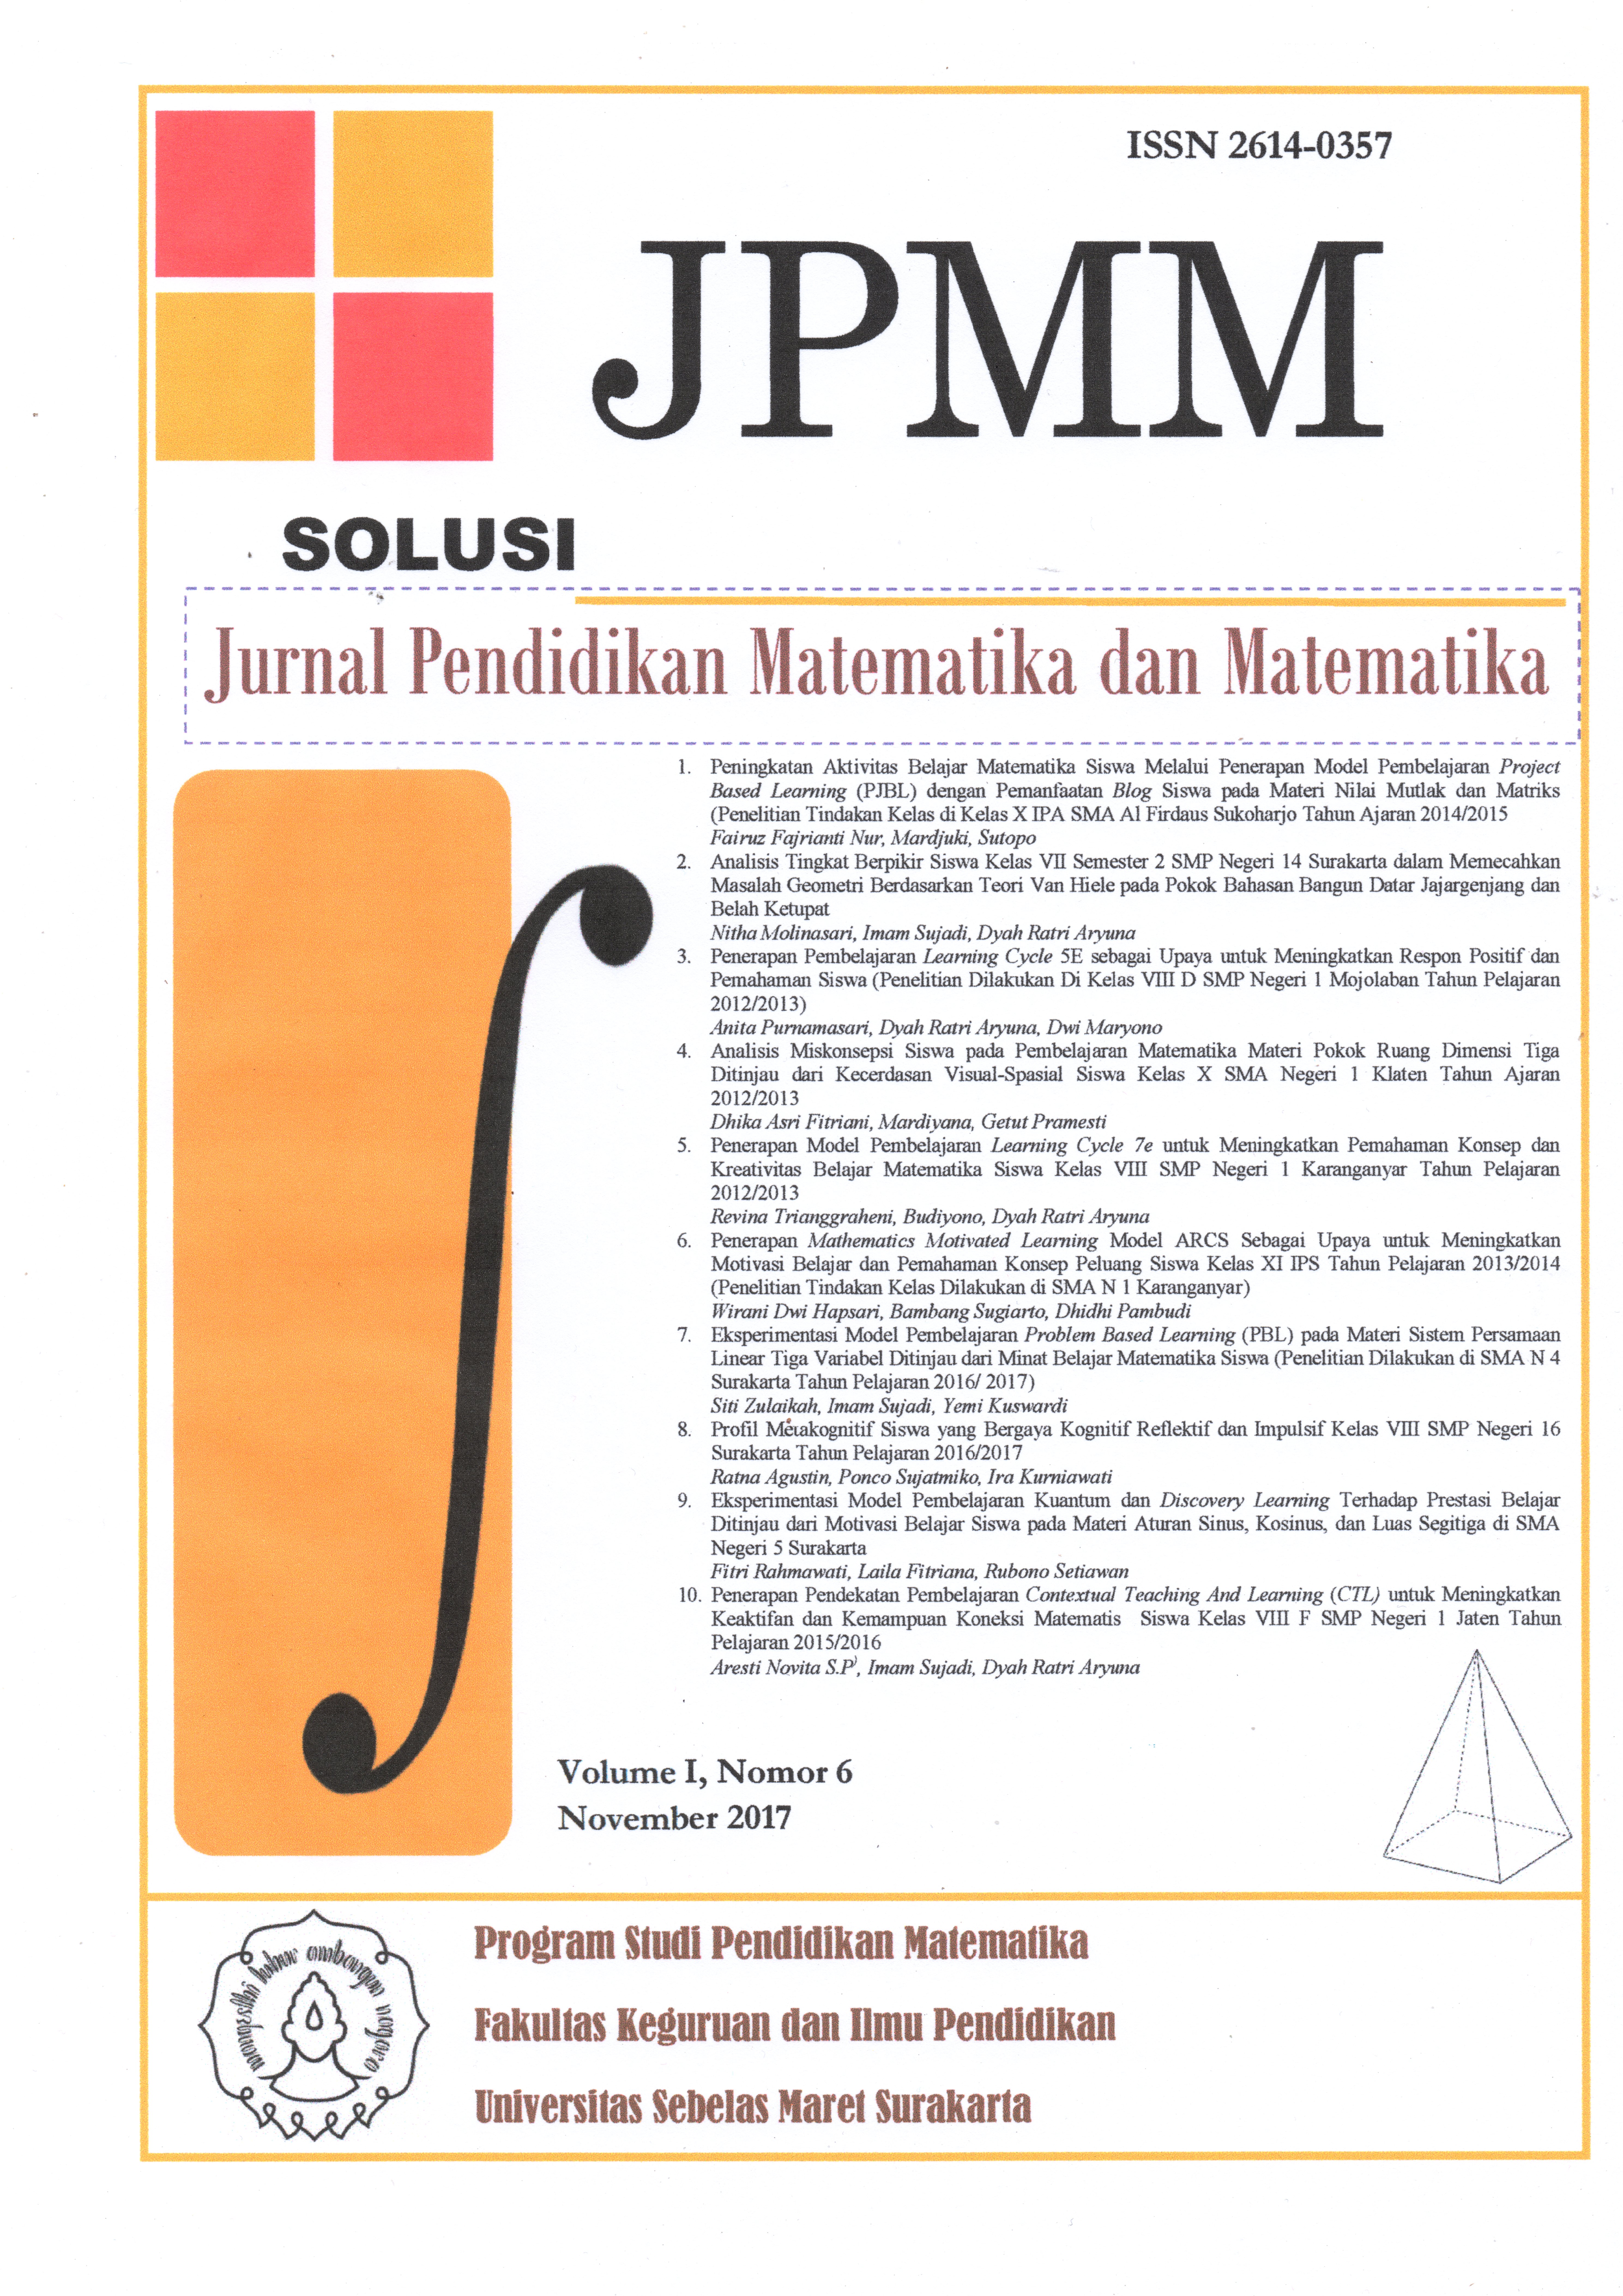 JPMM (Jurnal Pendidikan Matematika dan Matematika) Solusi adalah jurnal yang berisi hasil – hasil penelitian dan pemikiran di bidang pendidikan matematika dan keilmuan matematika (analisis, aljabar, matematika terapan dan statistika). Terbit pertama kali